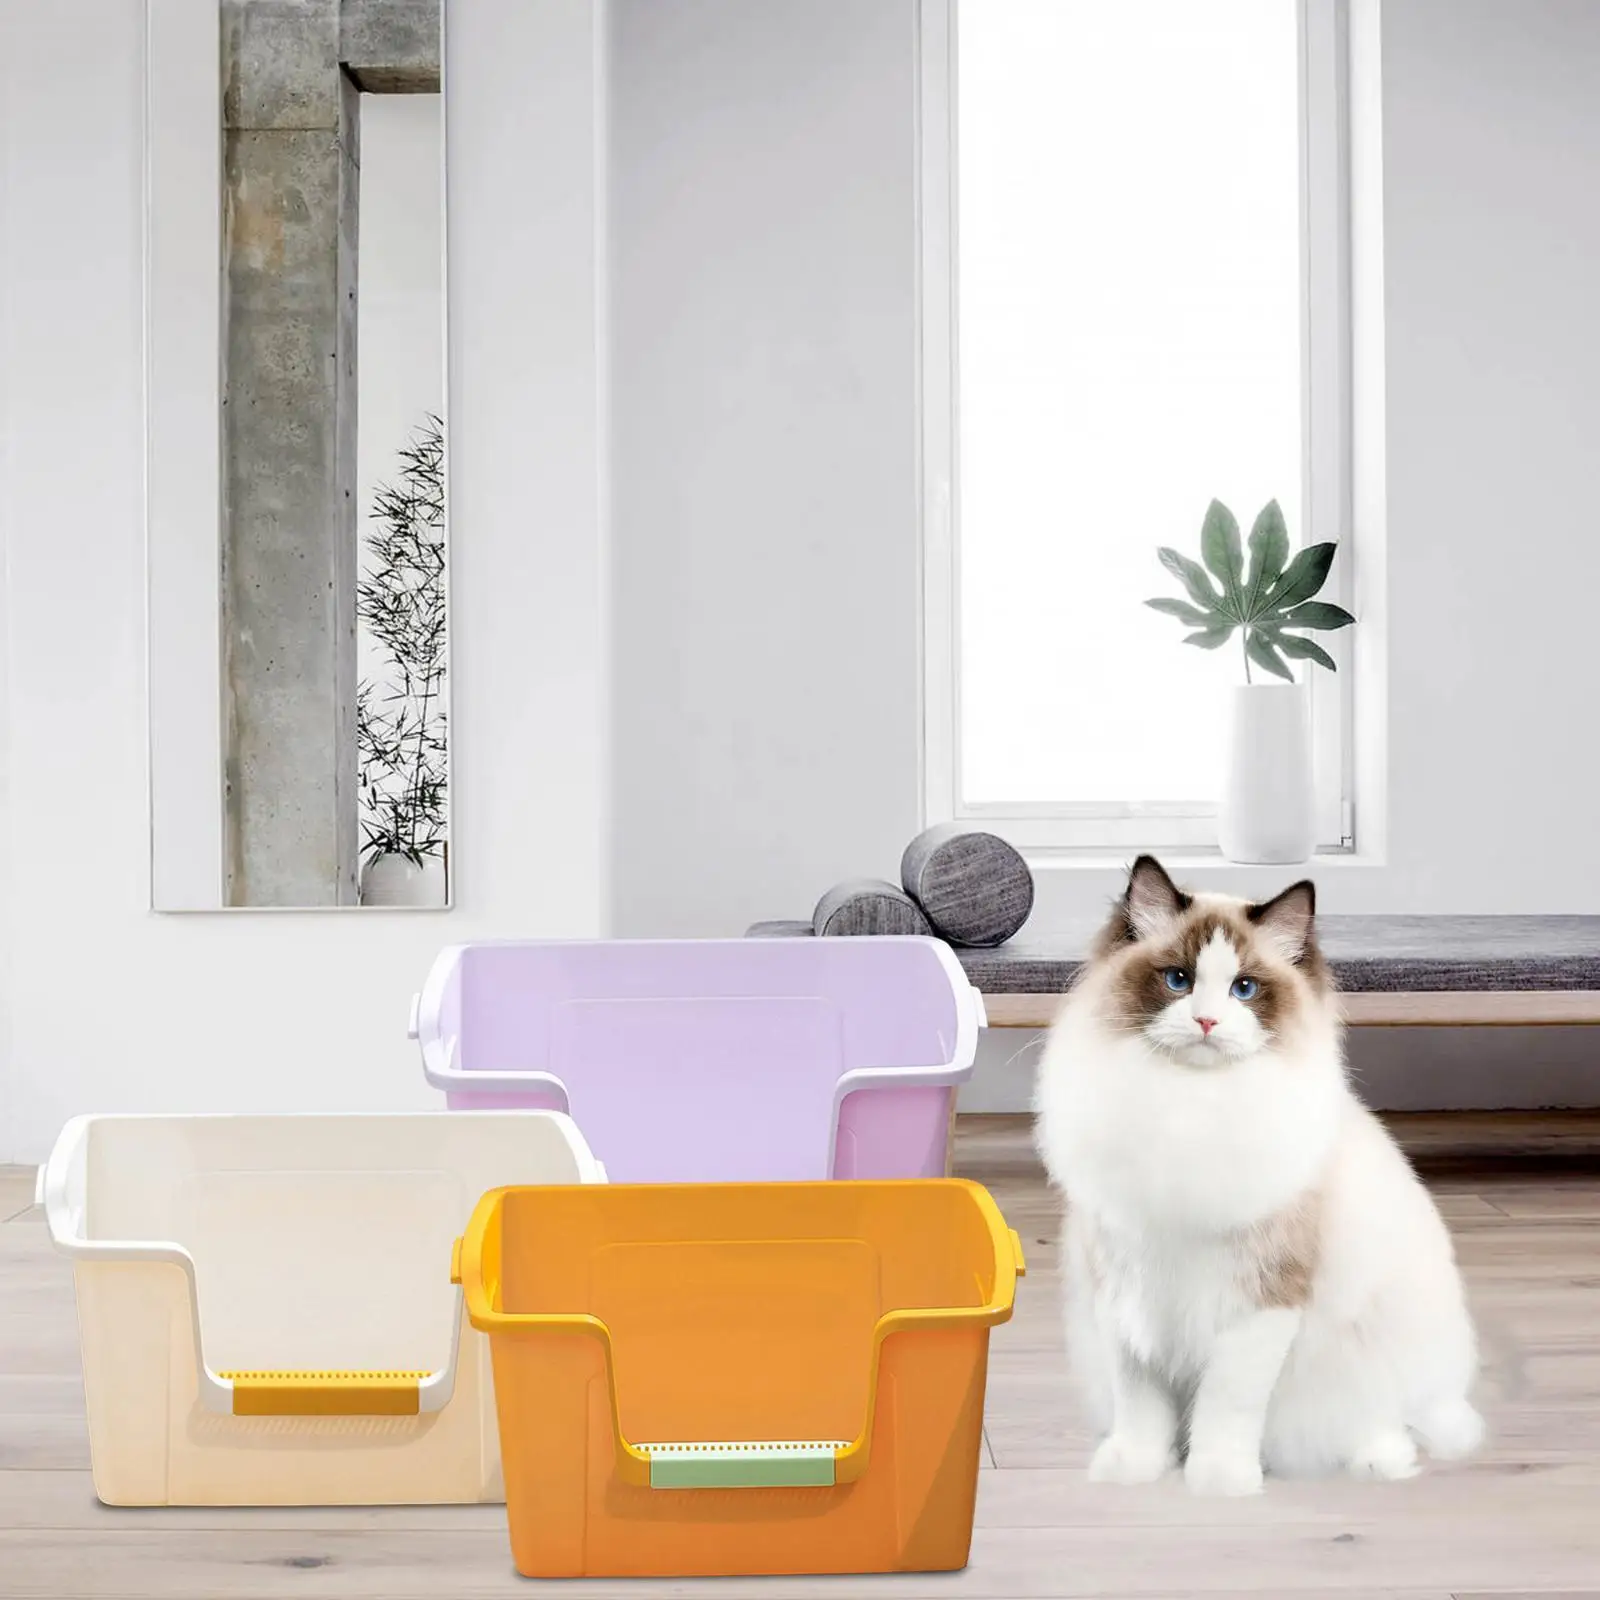 Cat Litter Box Sand Box Semi Enclosed Bedpan Anti Splashing Cat Litter Tray